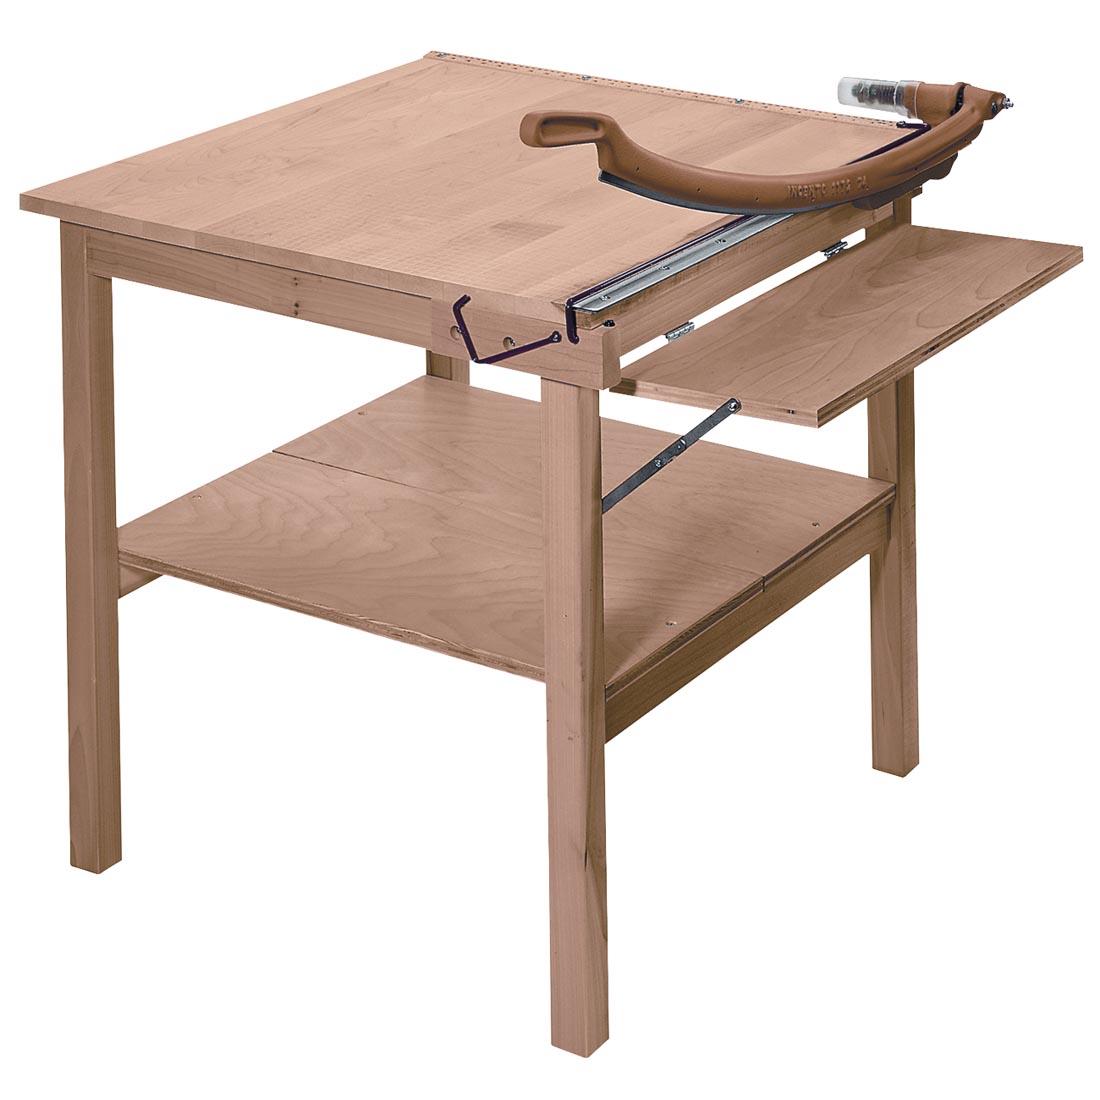 Table Model Swingline Classic Cut Ingento Maple Trimmer